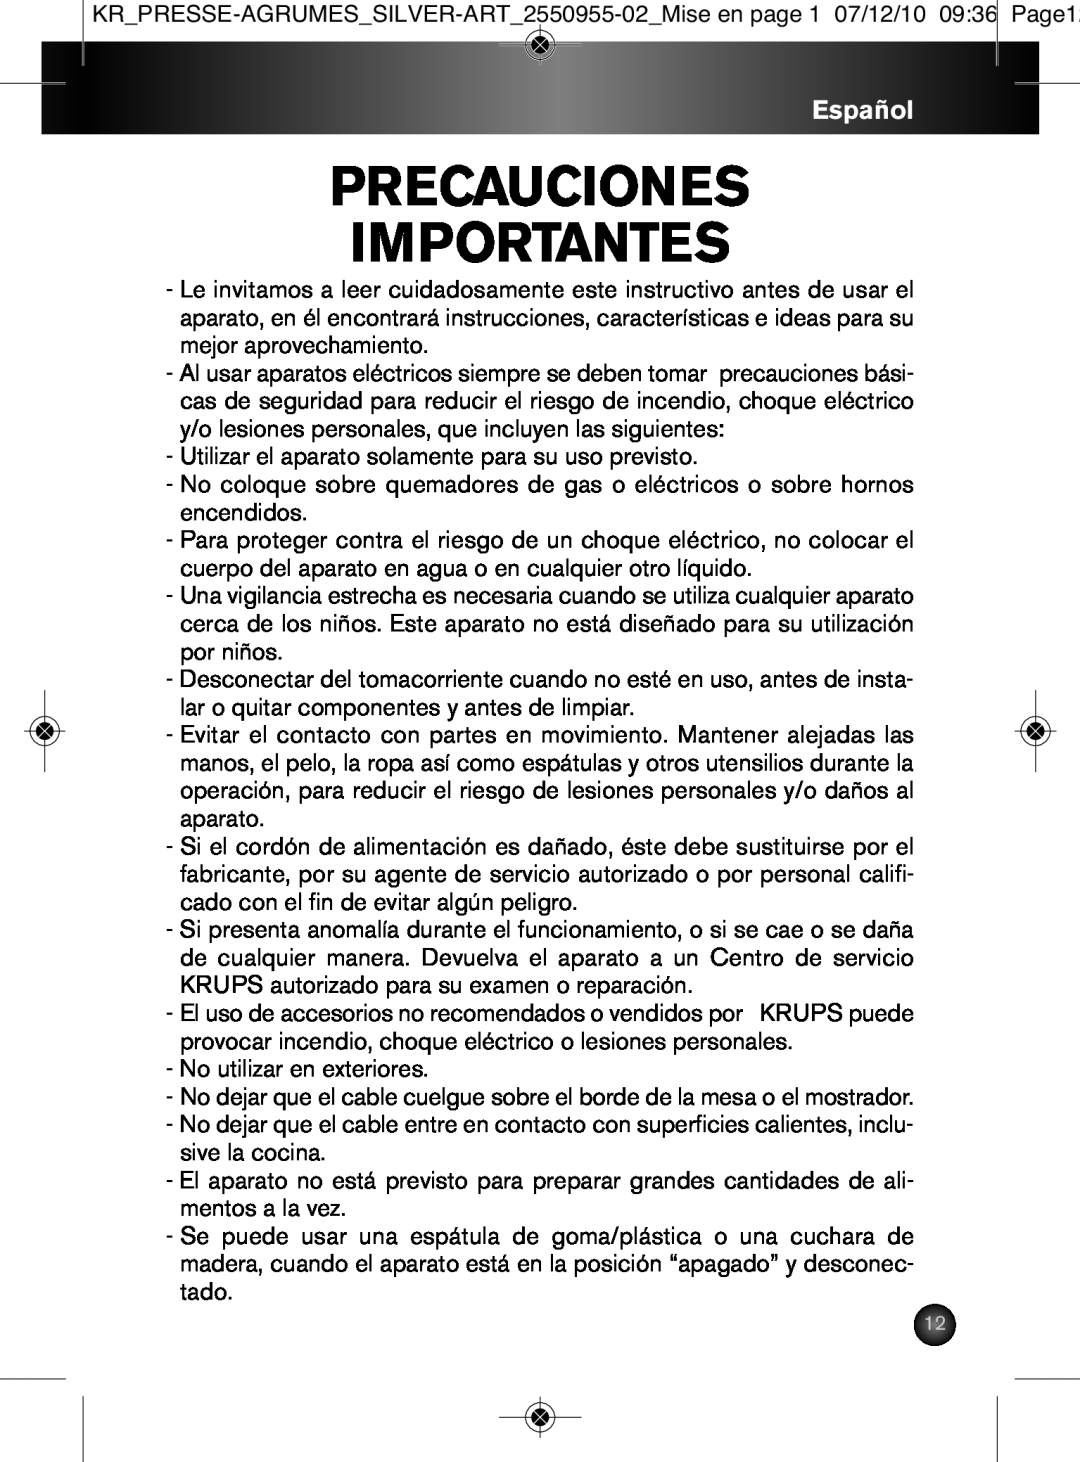 Krups 2550955-02 manual Español, Precauciones Importantes 